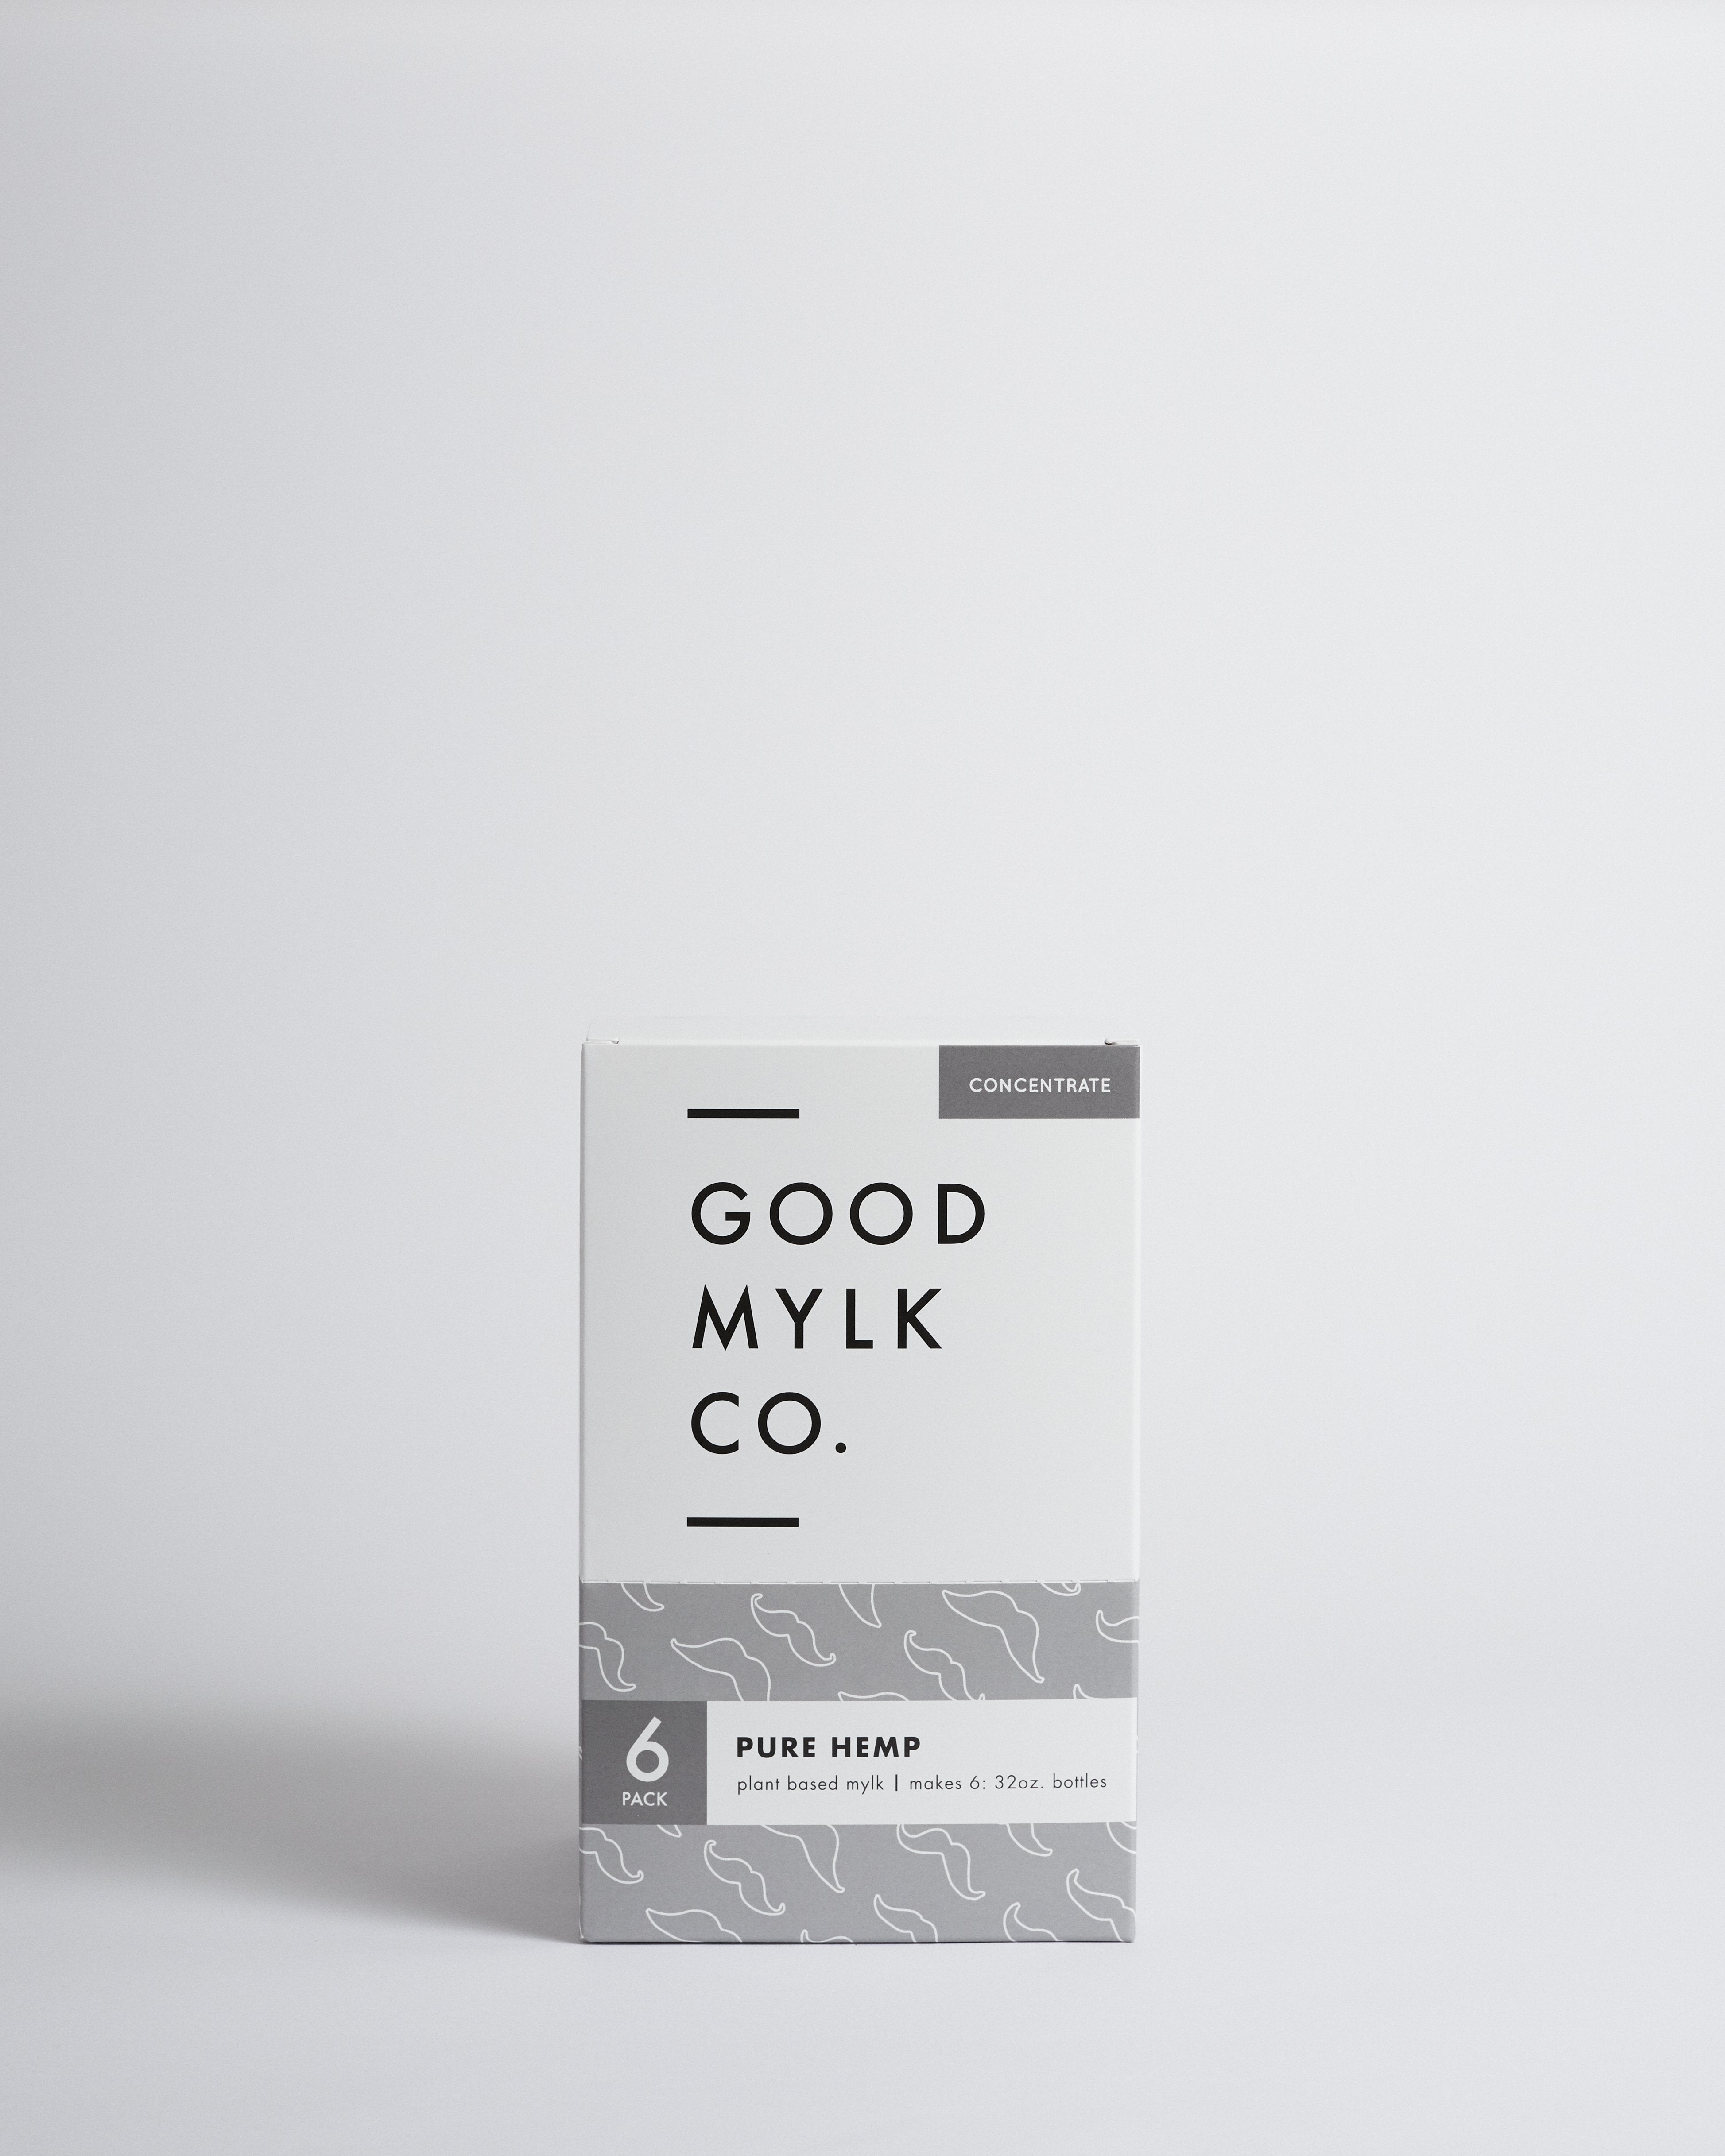 Pure Hemp Mylk Concentrate Goodmylk Co. Pure (Unsweetened) 6-Pack 